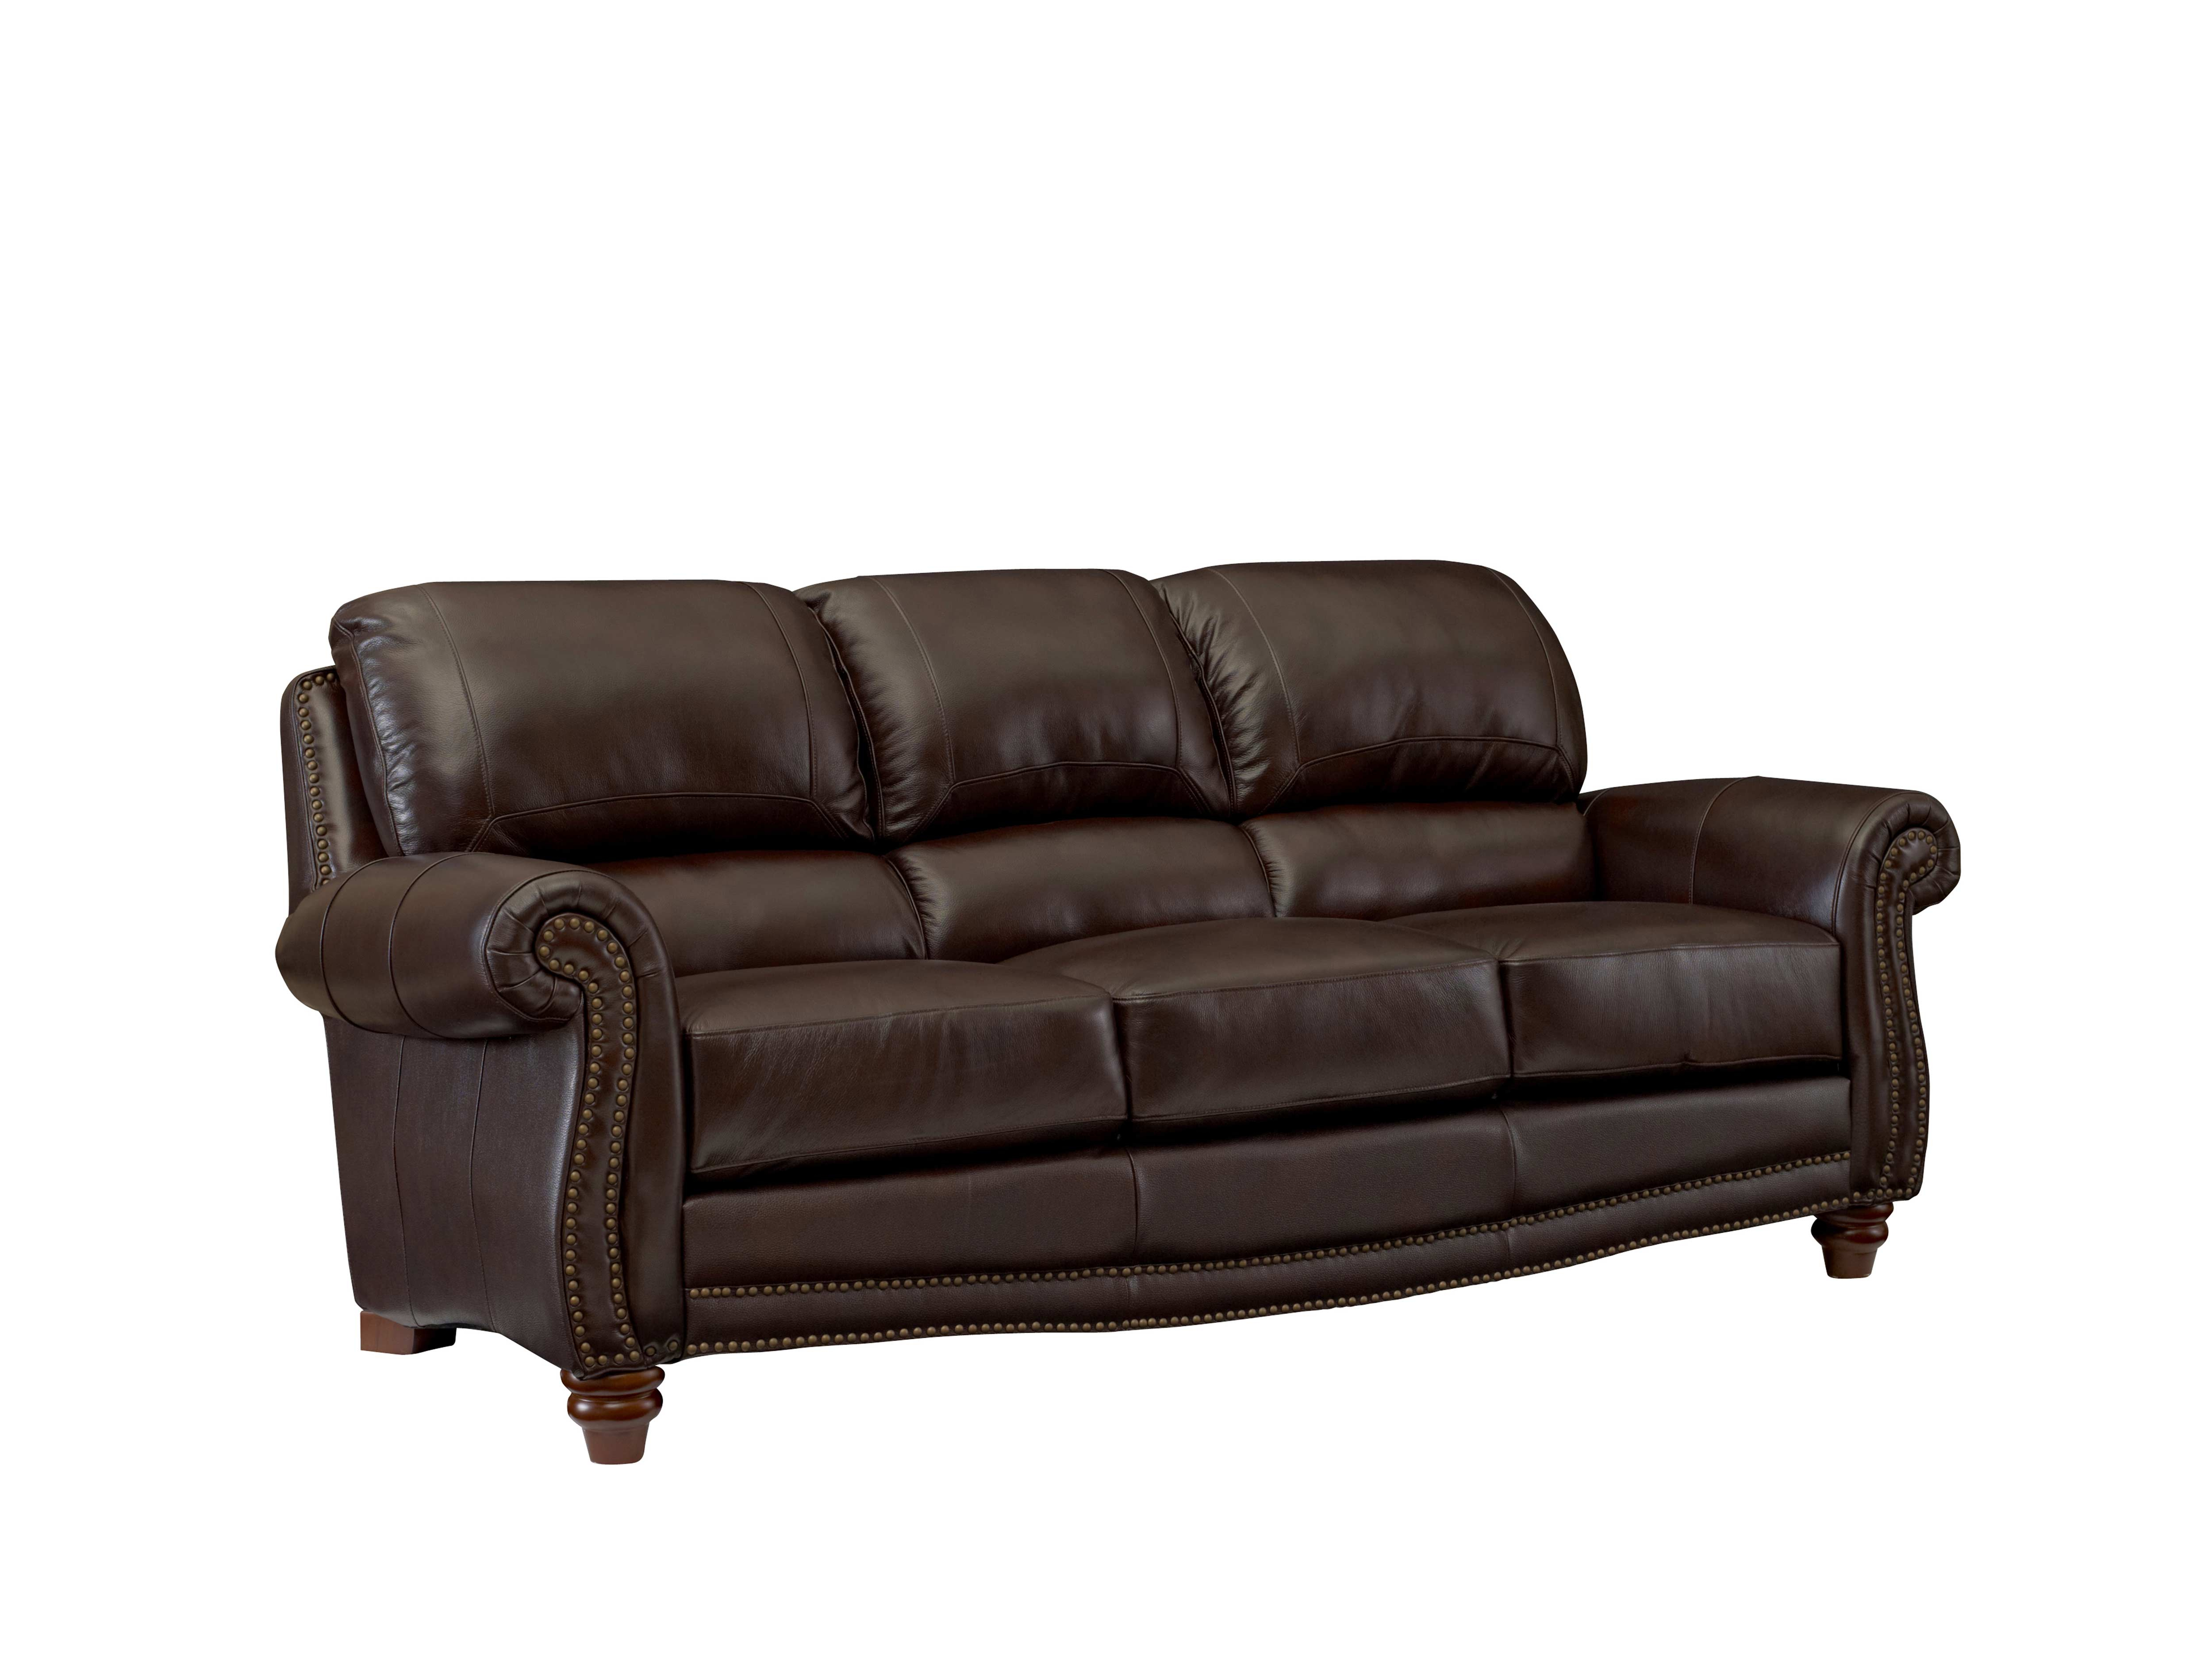 leather italia usa presidential james sofa s9922 tobacco